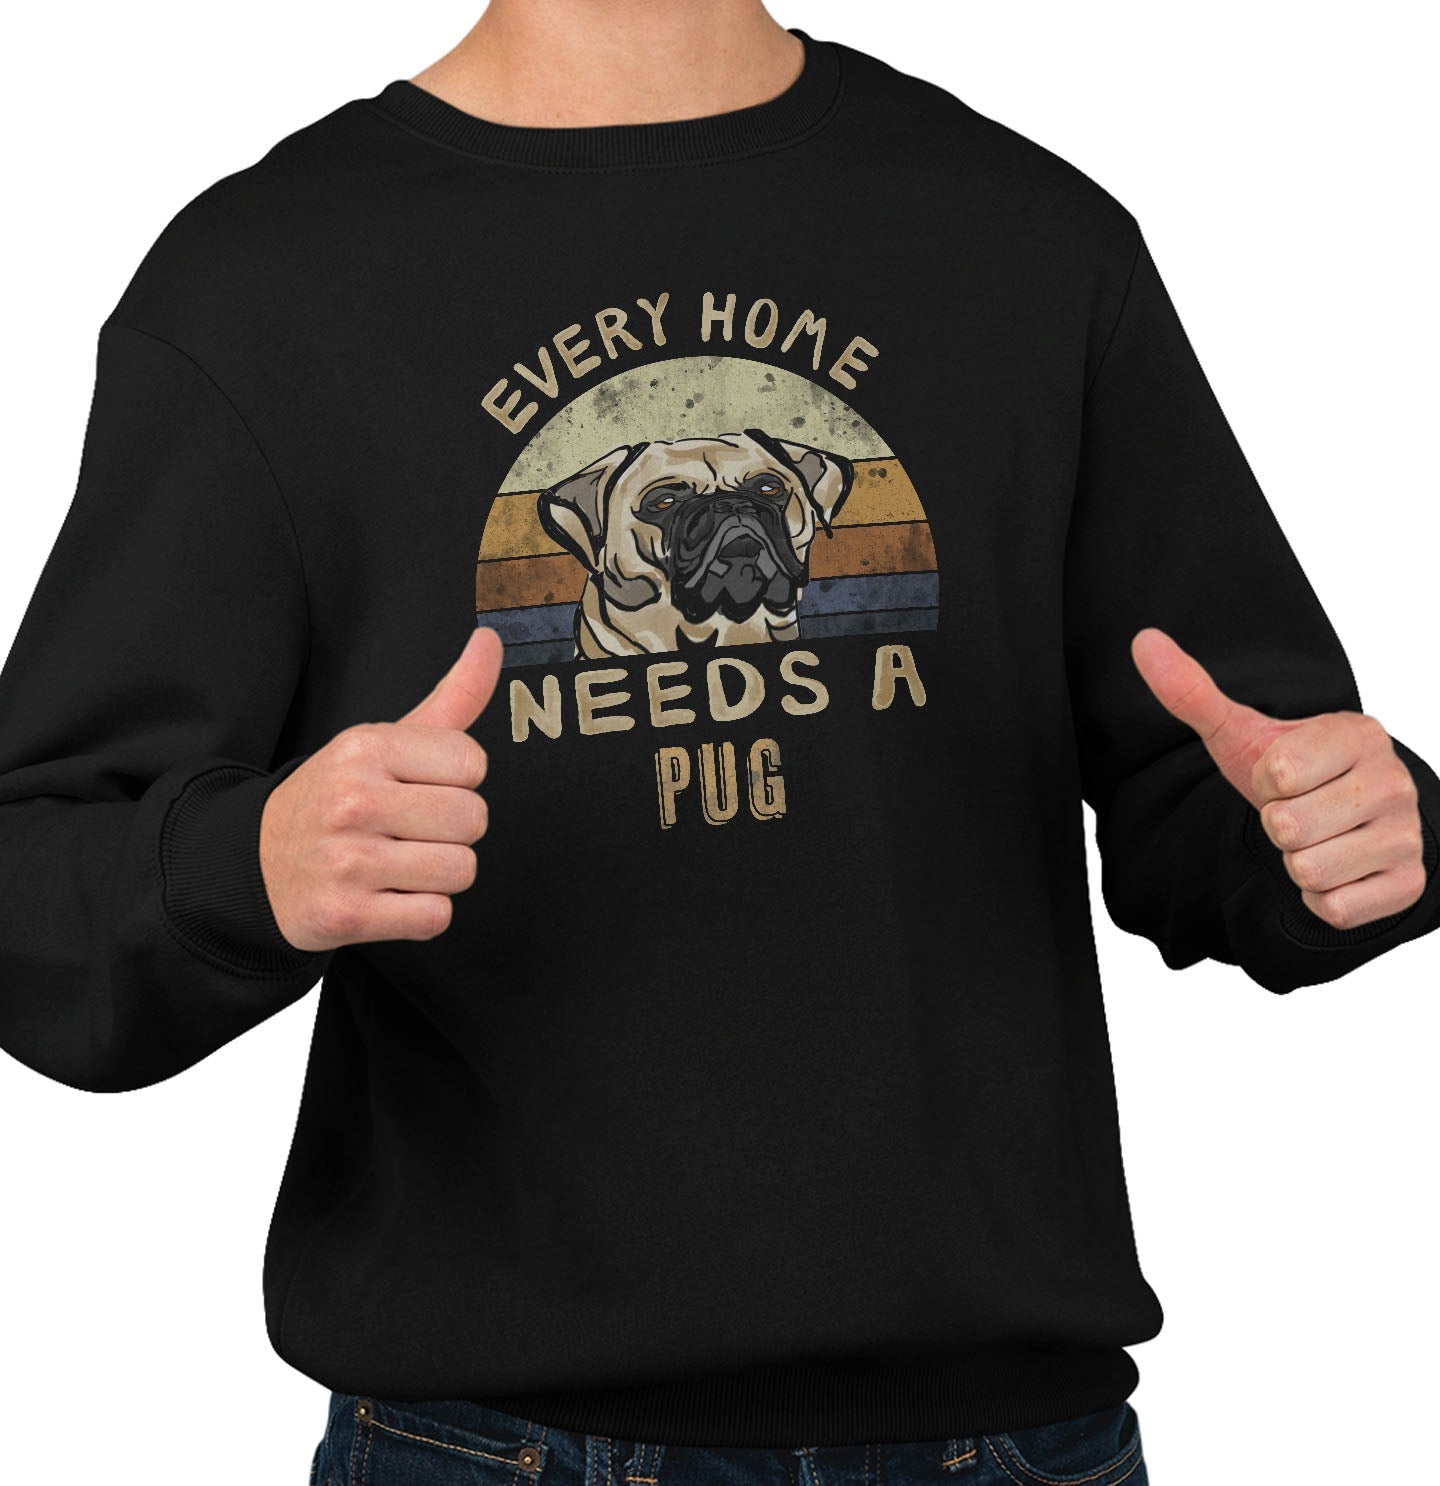 Every Home Needs a Pug - Adult Unisex Crewneck Sweatshirt